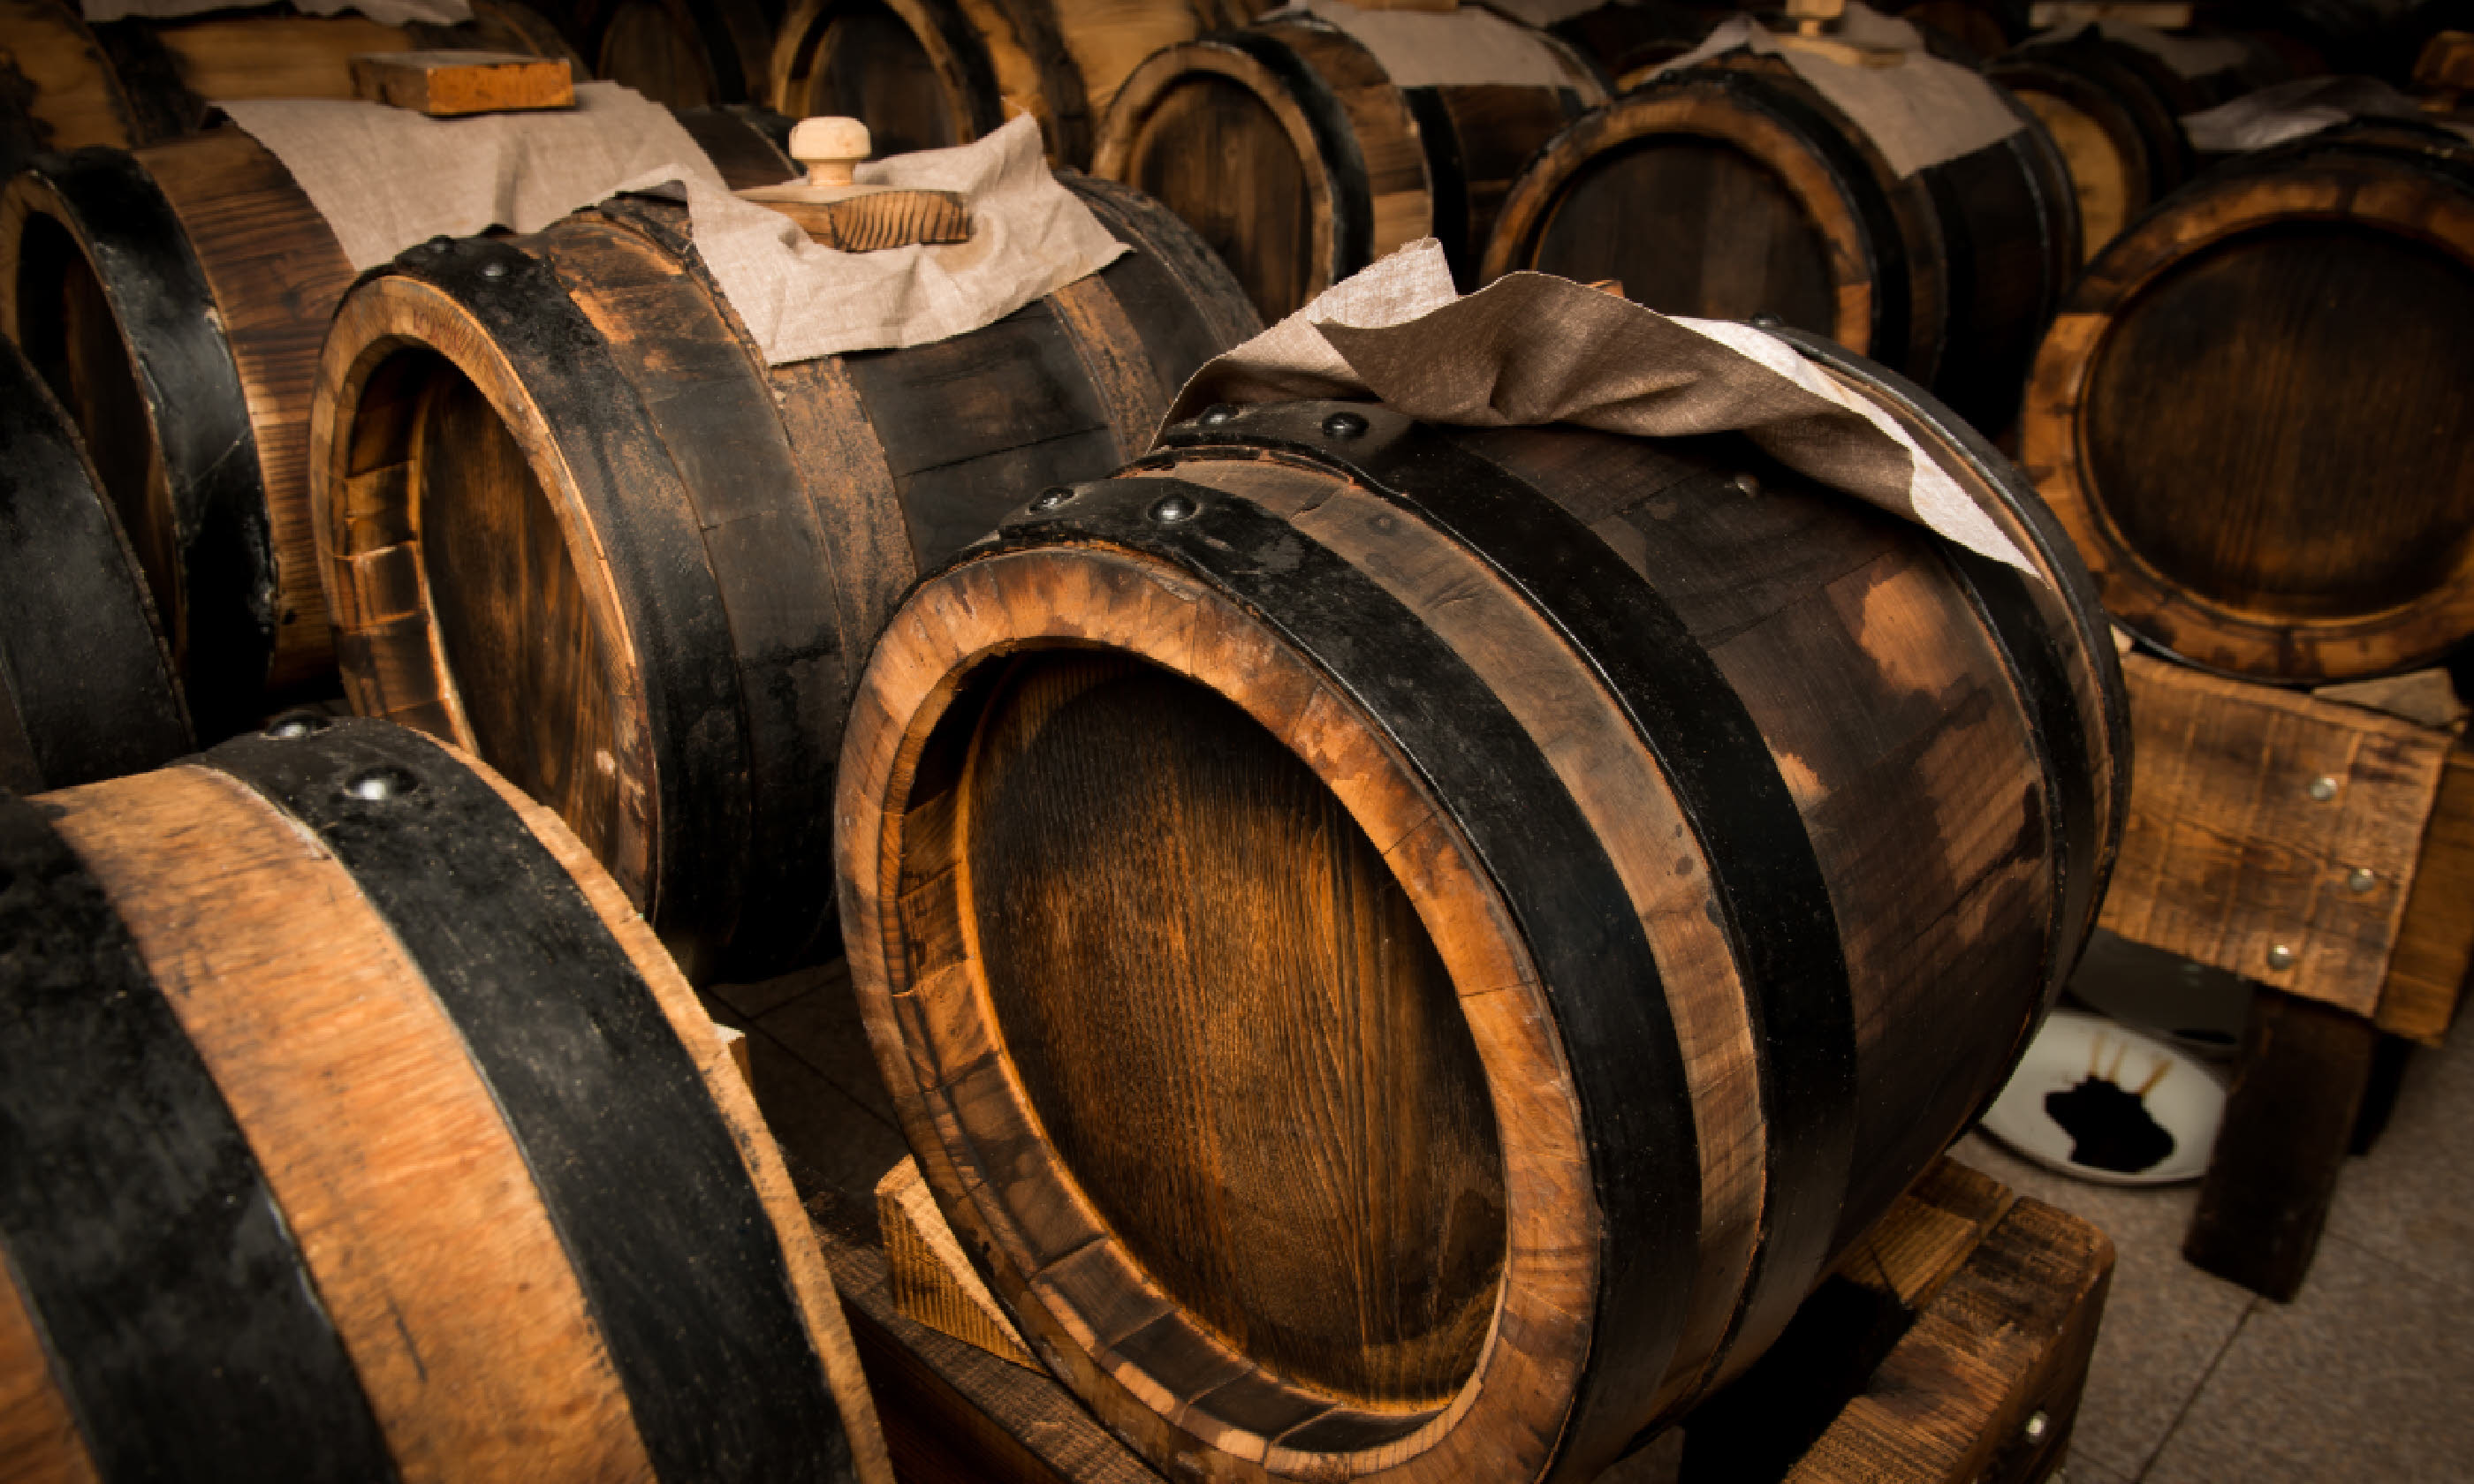 Balsamic vinegar barrels (Shutterstock)